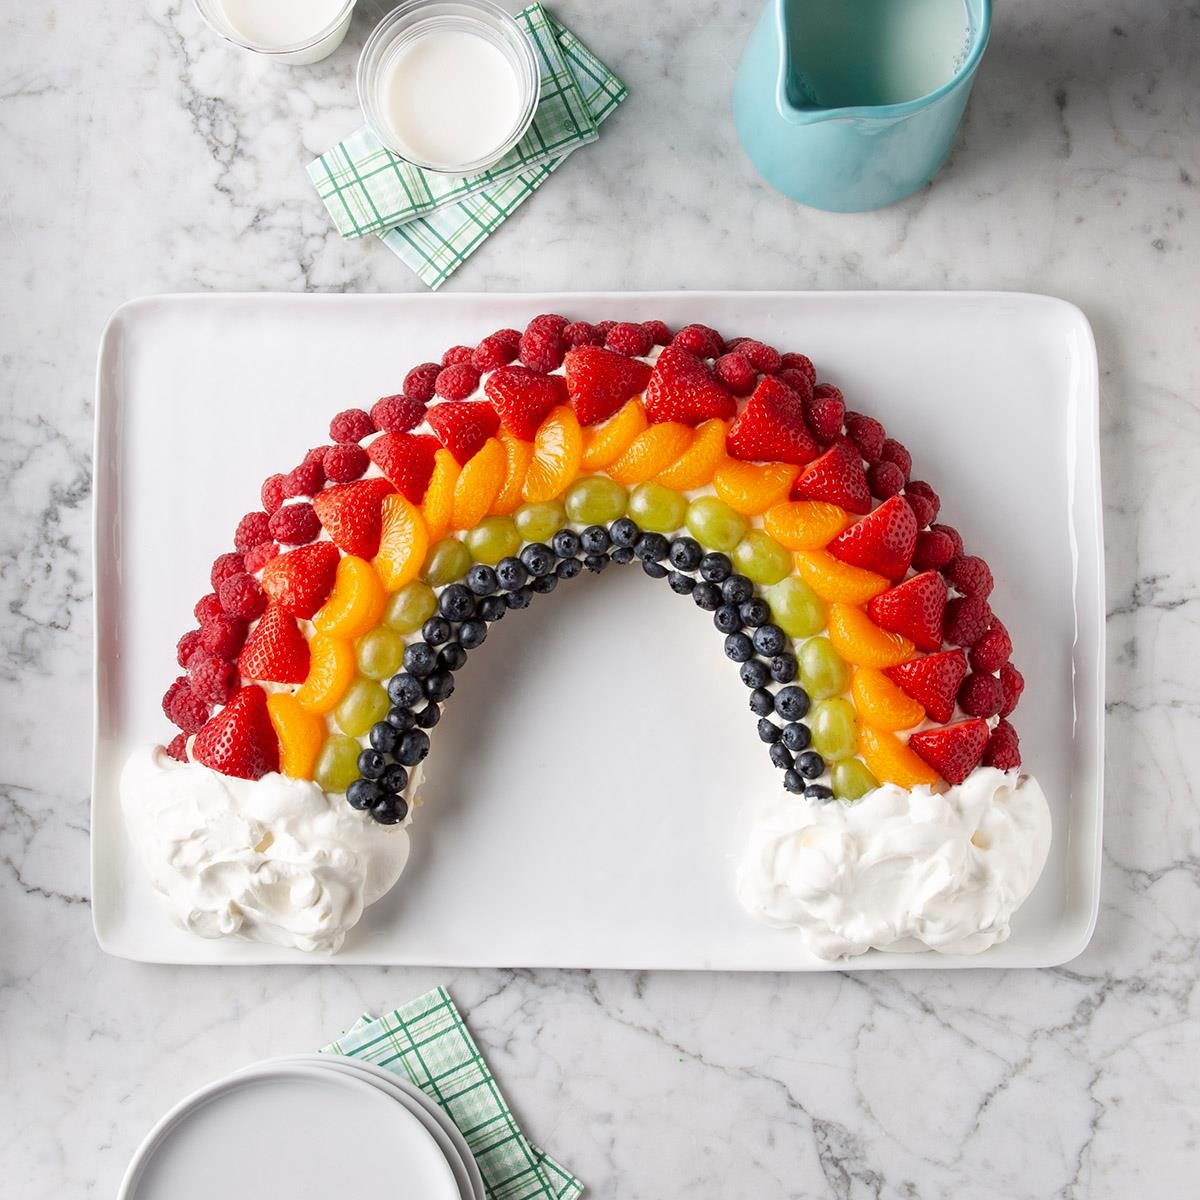 A magical rainbow cake! Source: Taste of Home